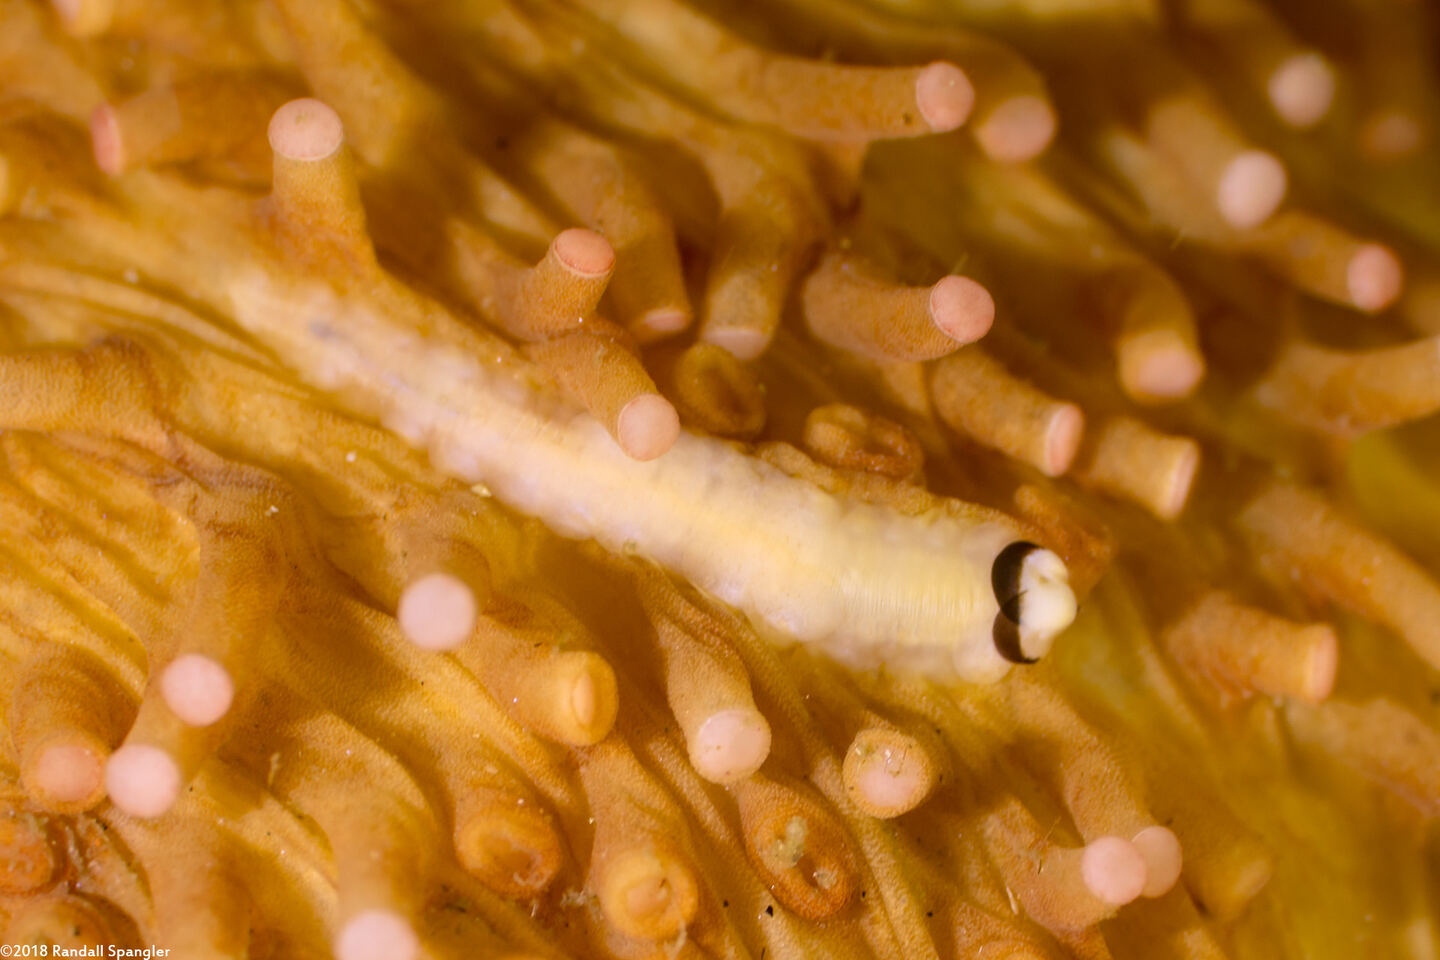 Arctonoe vittata (Yellow Scale Worm); On a warty sea cucumber